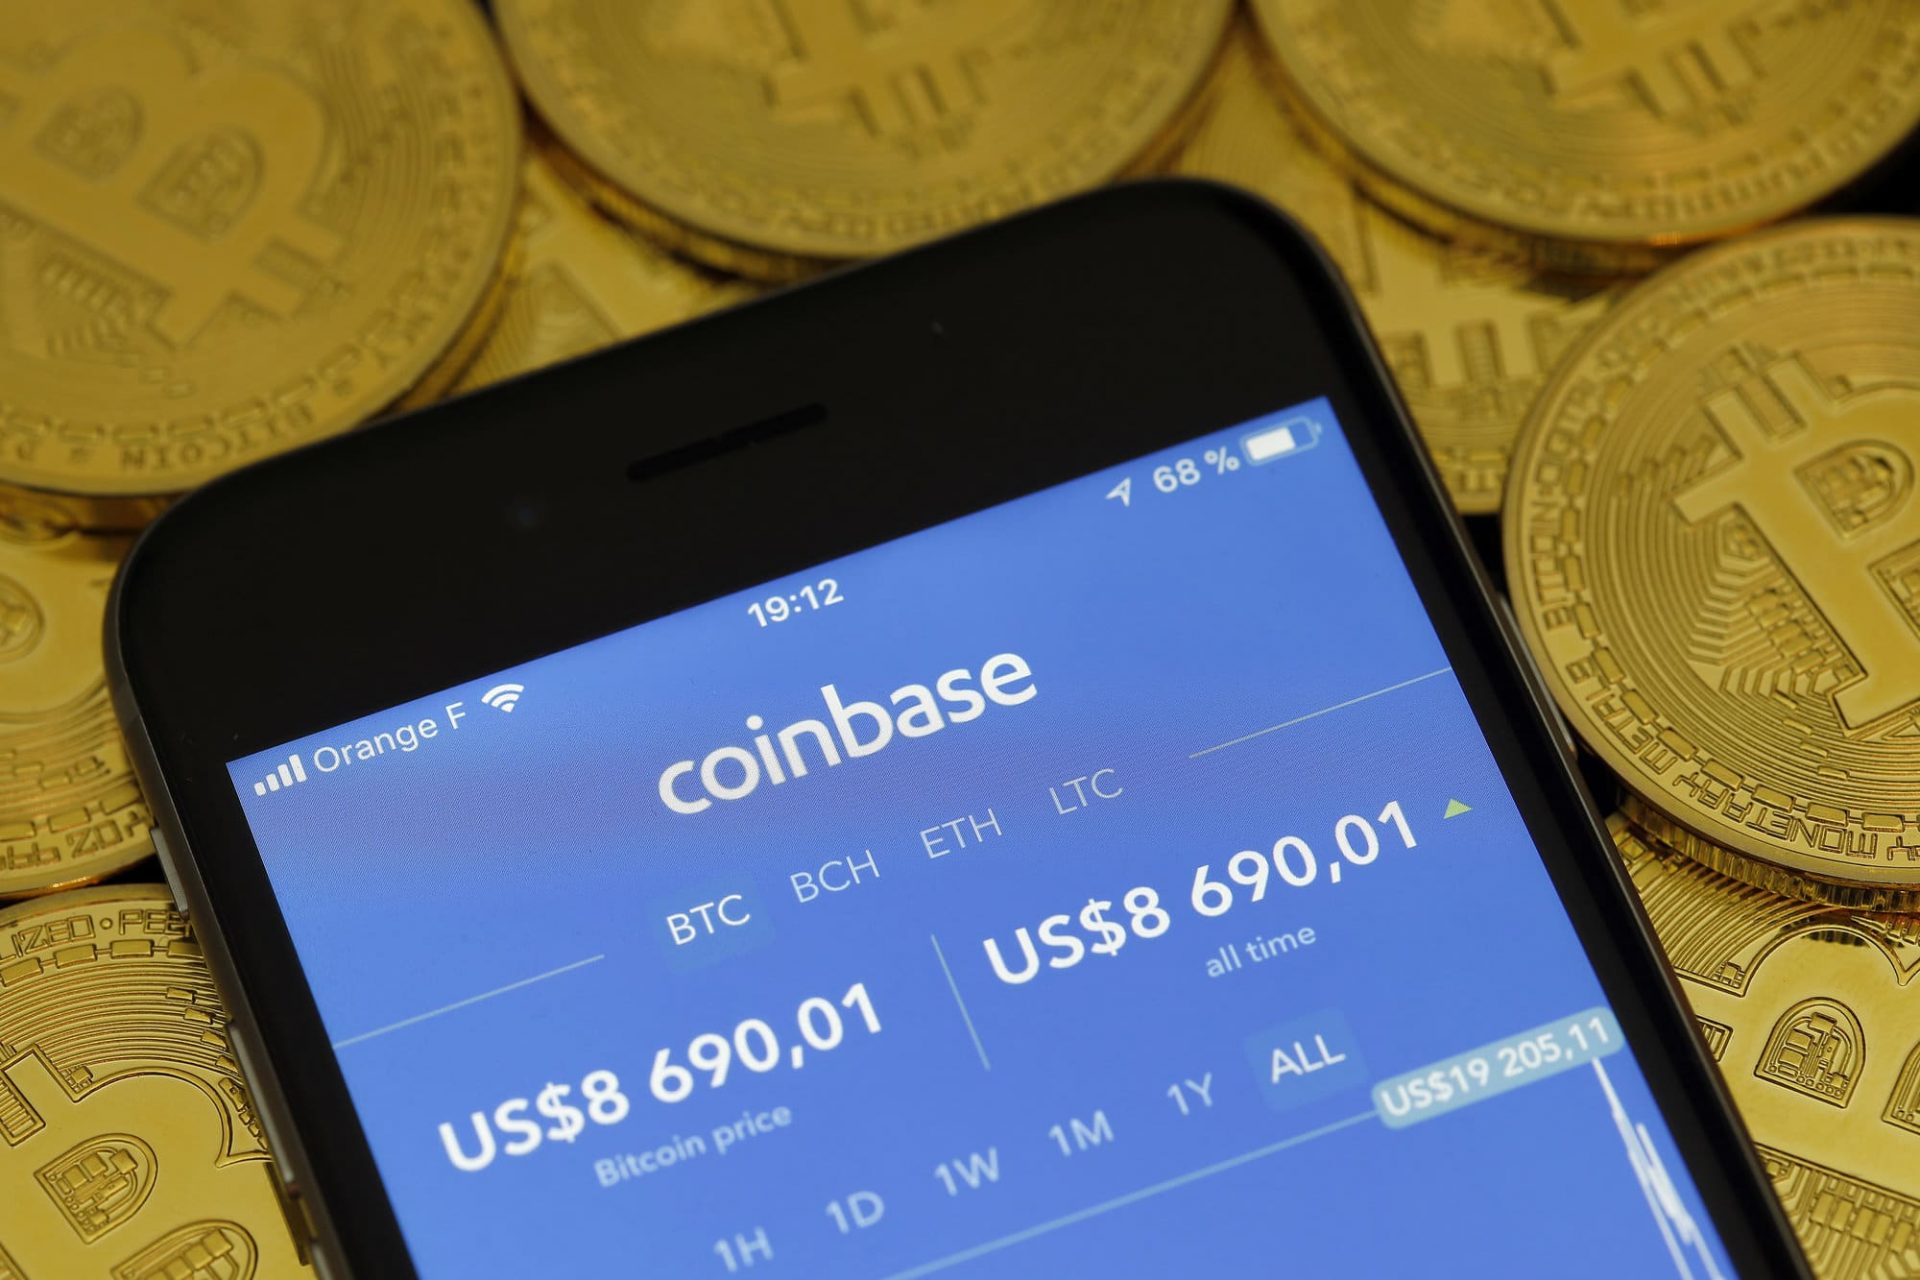 Bitcoin hits fresh all-time high above $62,000 earlier than Coinbase debut